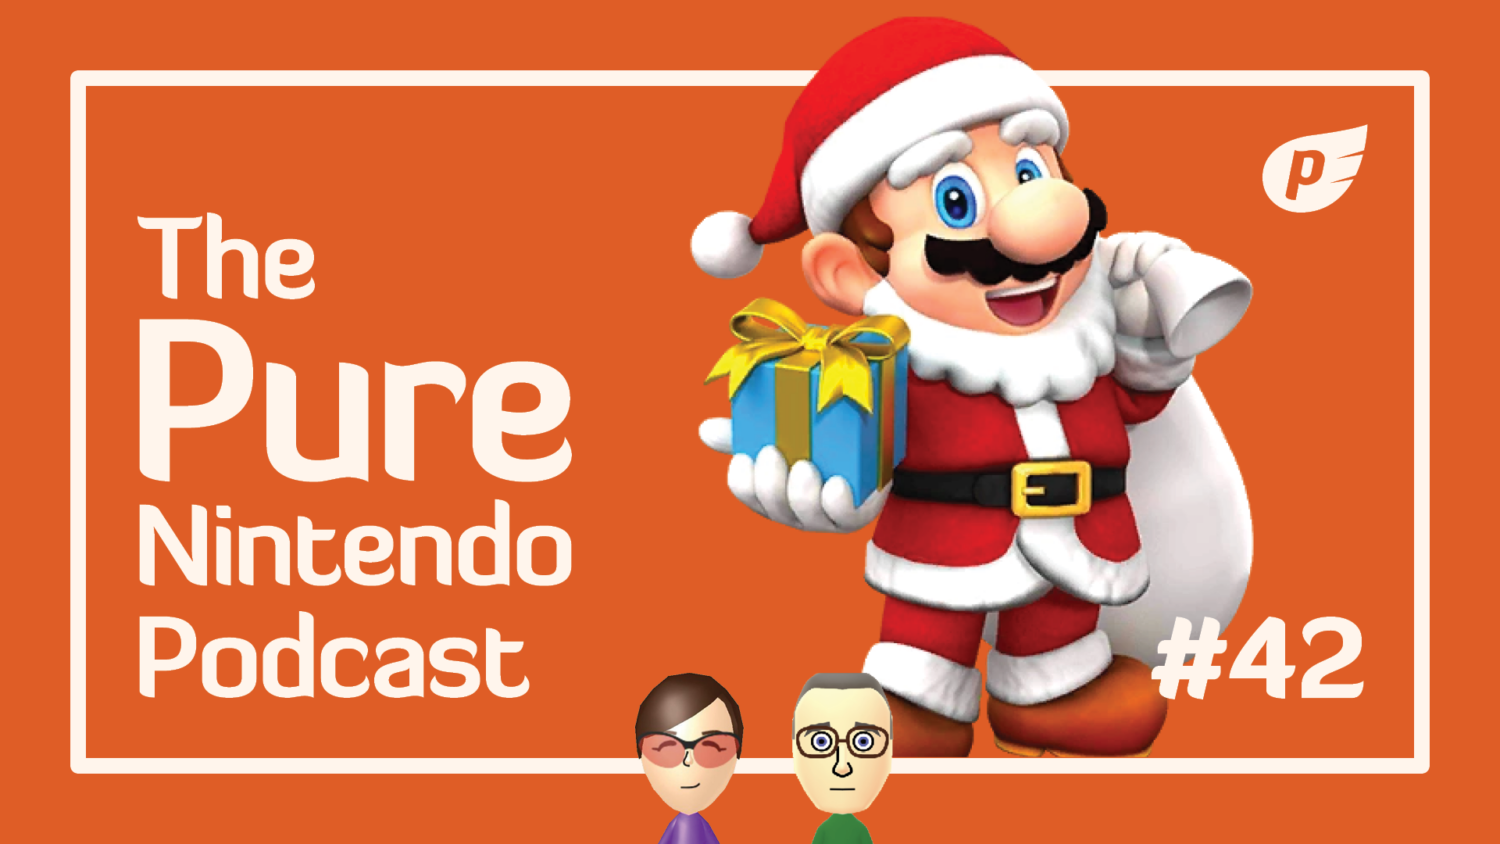 The Pure Nintendo Podcast episode 42